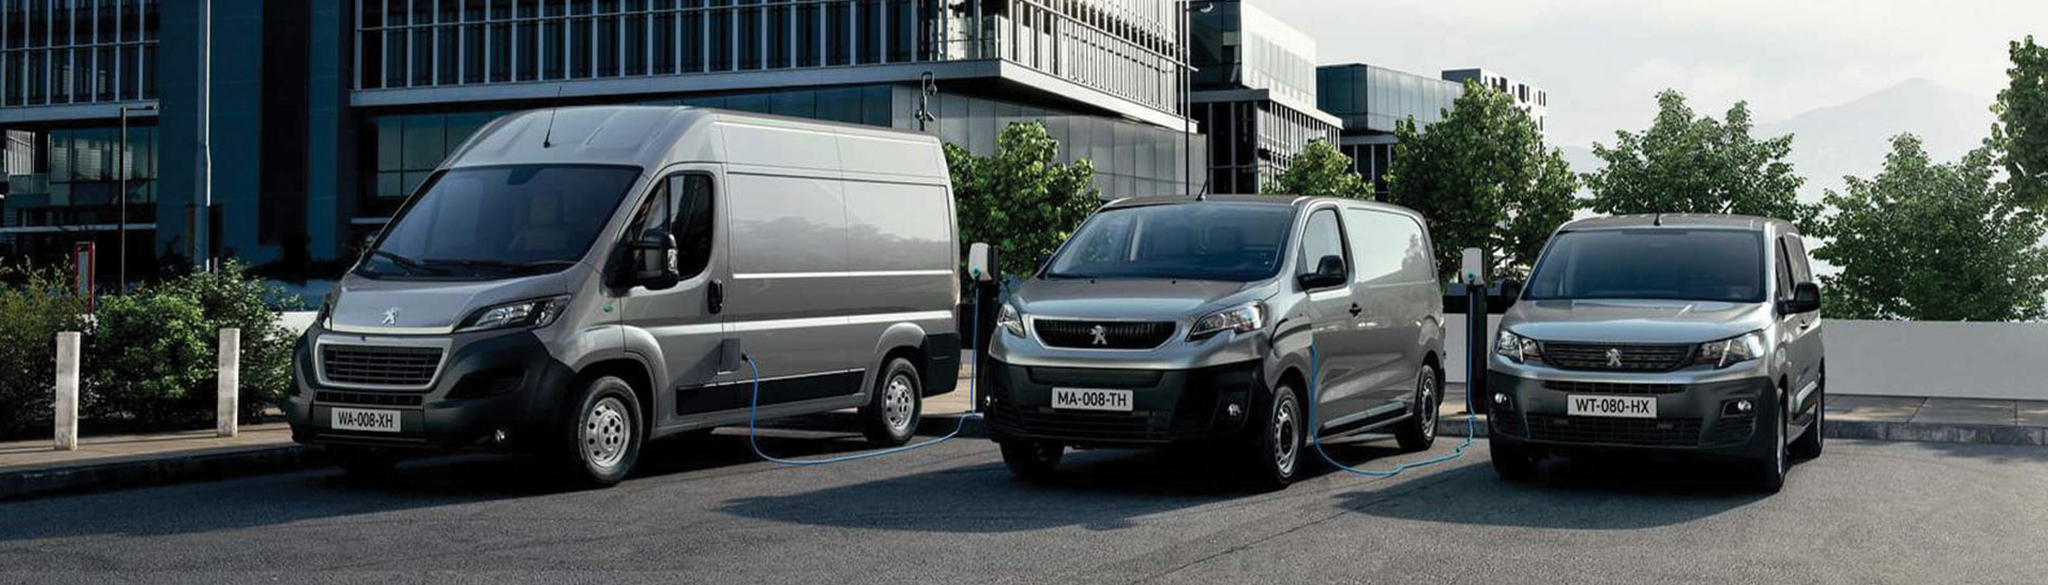 Peugeot e-Boxer, e-Expert and e-Partner Vans lined up on car park city